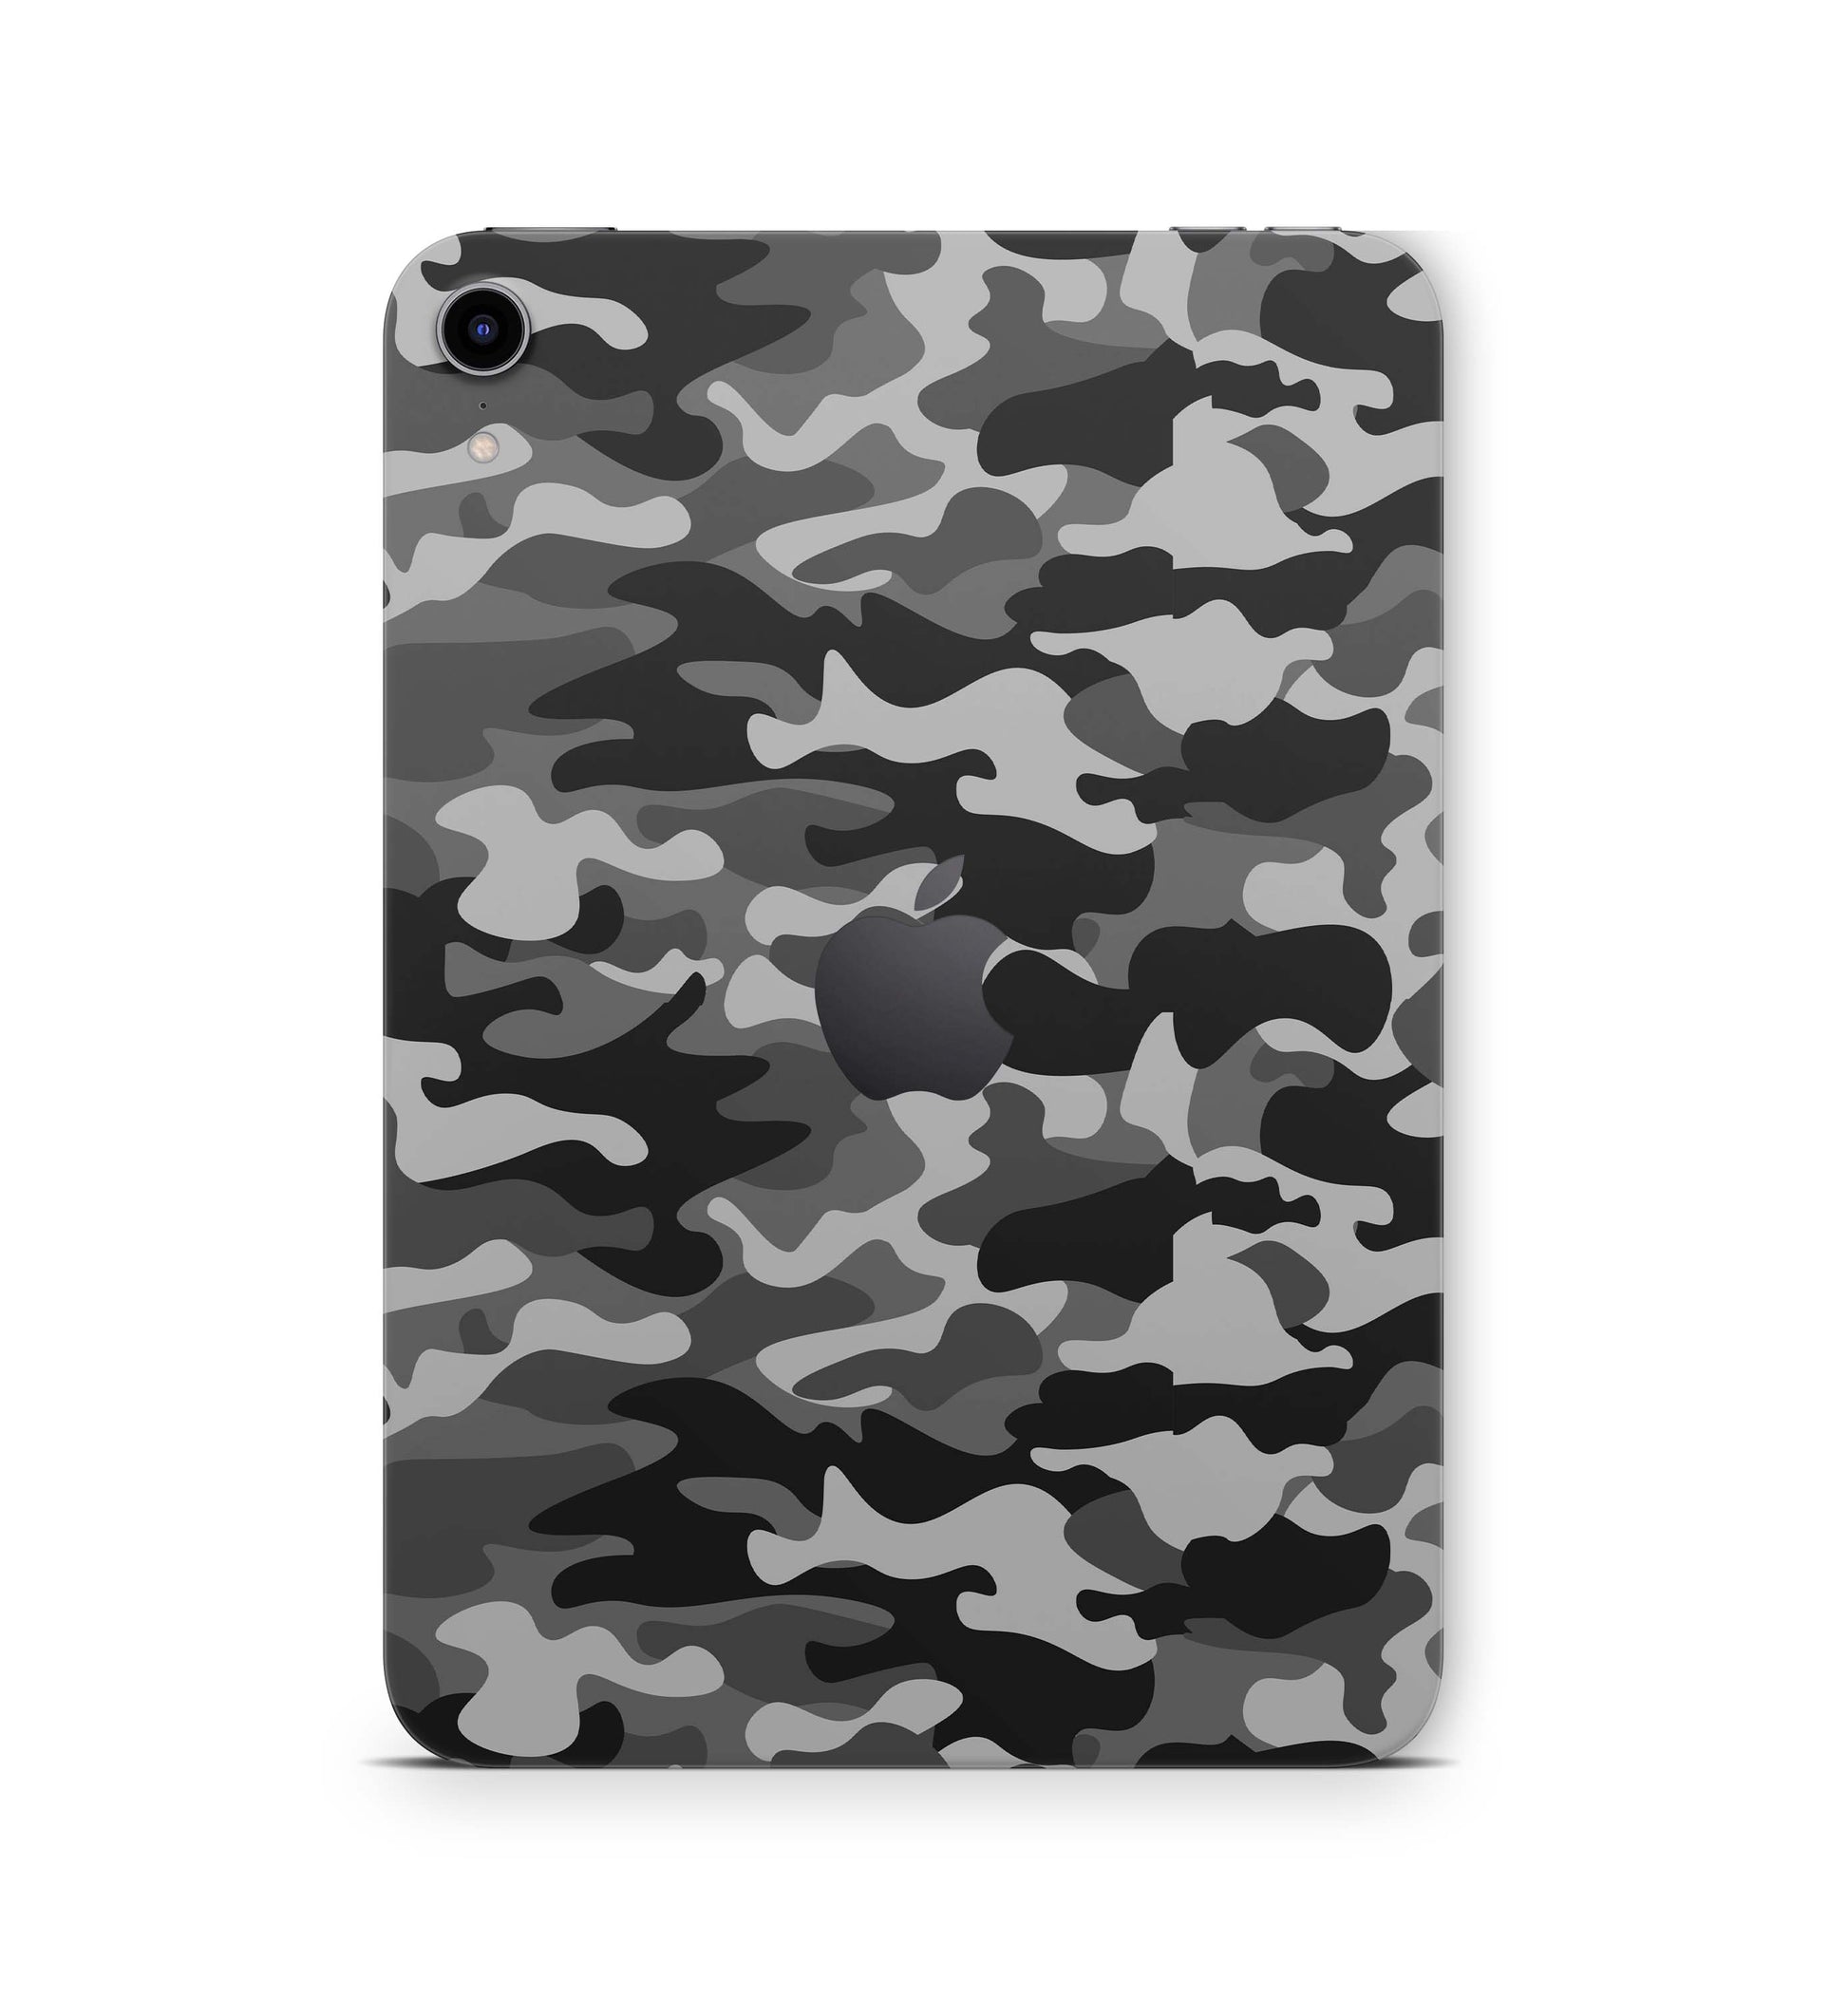 iPad Air Skin Design Cover Folie Vinyl Skins & Wraps für alle iPad Air Modelle Aufkleber Skins4u Urban-Camo  